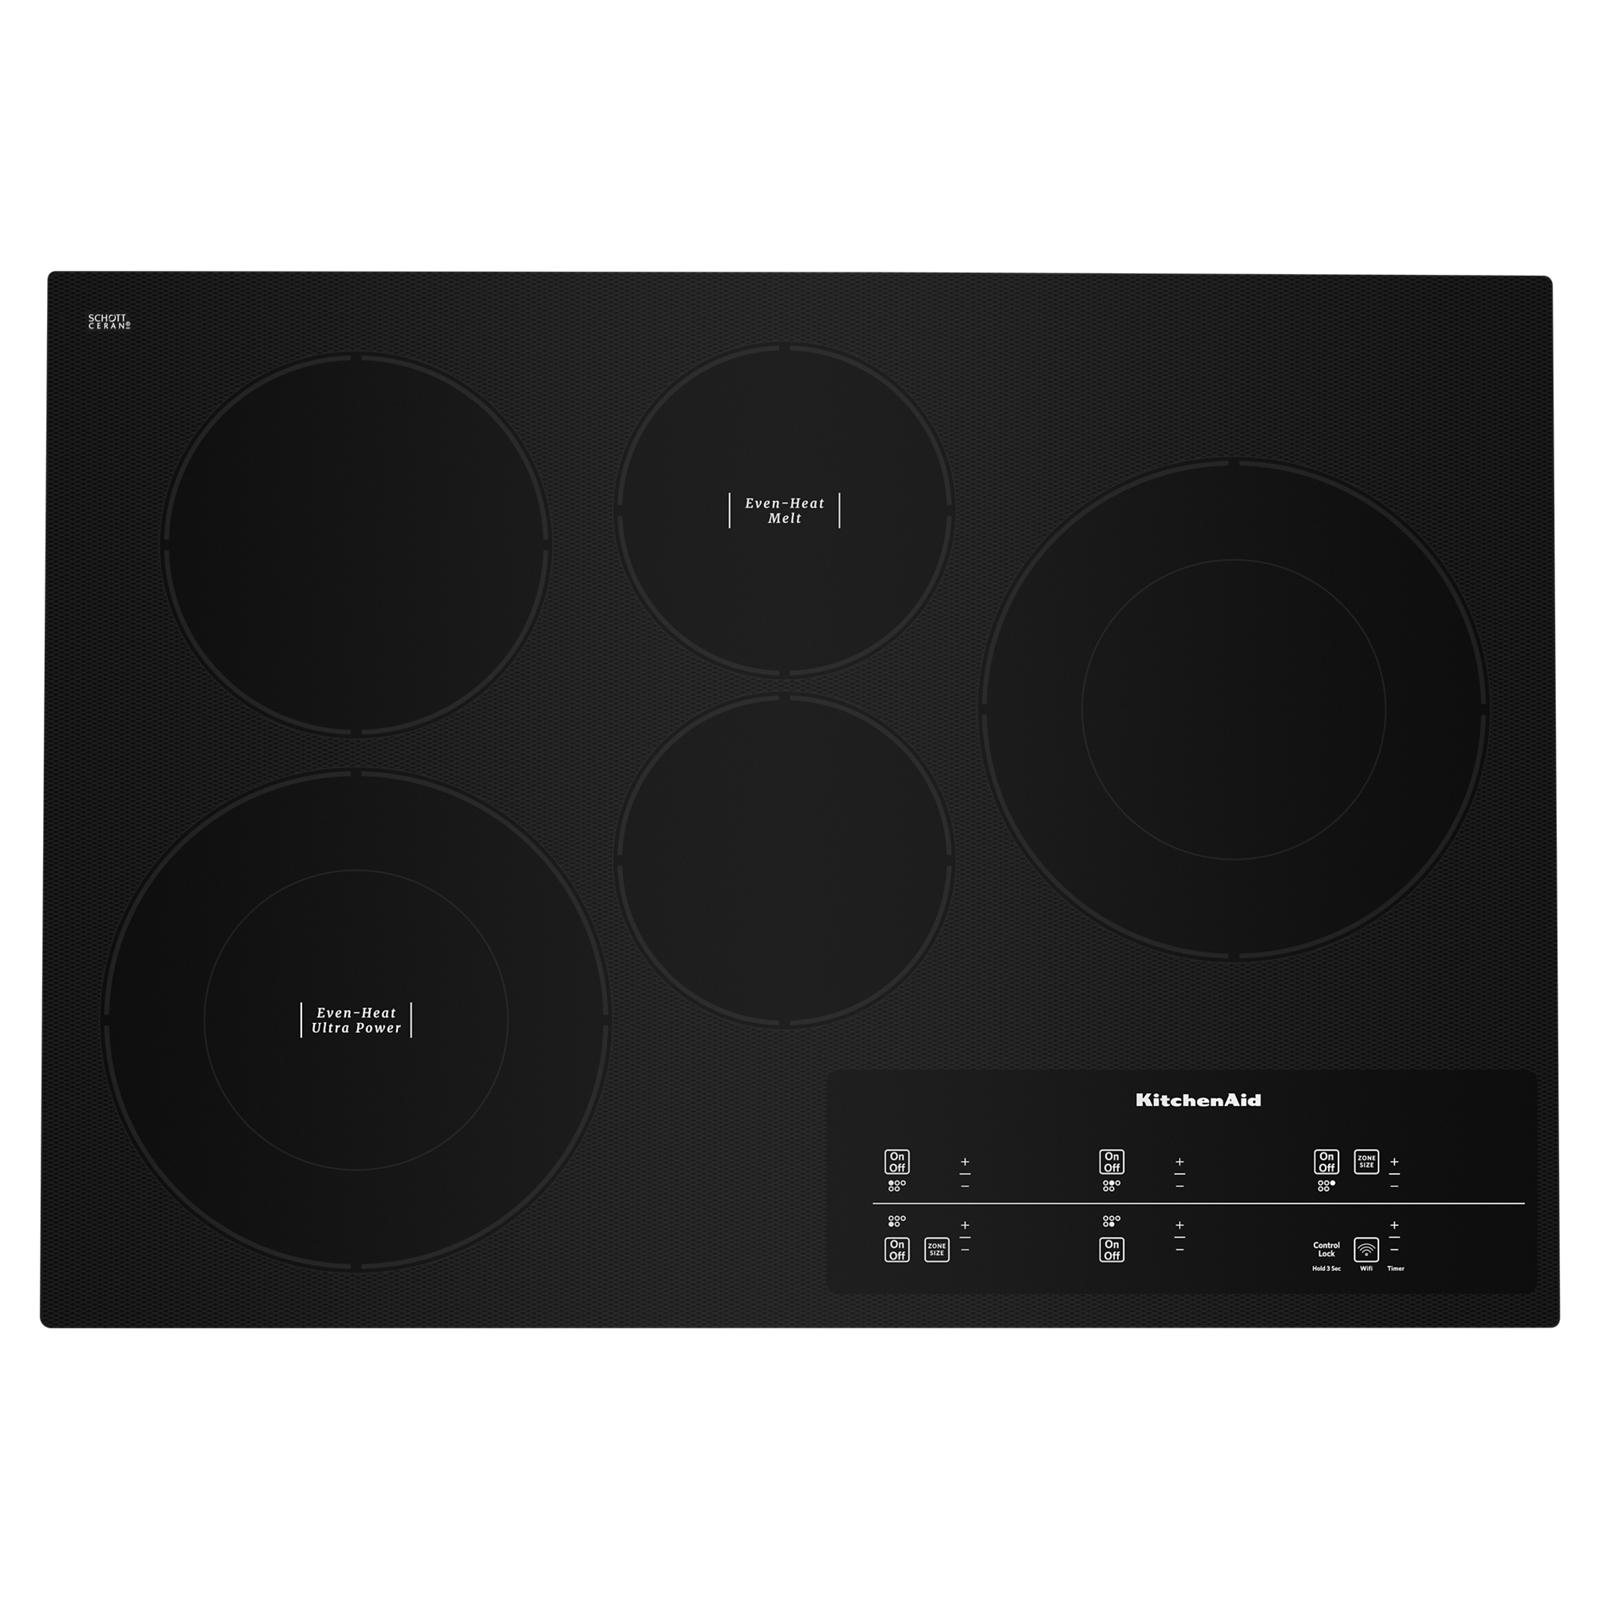 KitchenAid - 29 inch wide Electric Cooktop in Black - KCES950KBL